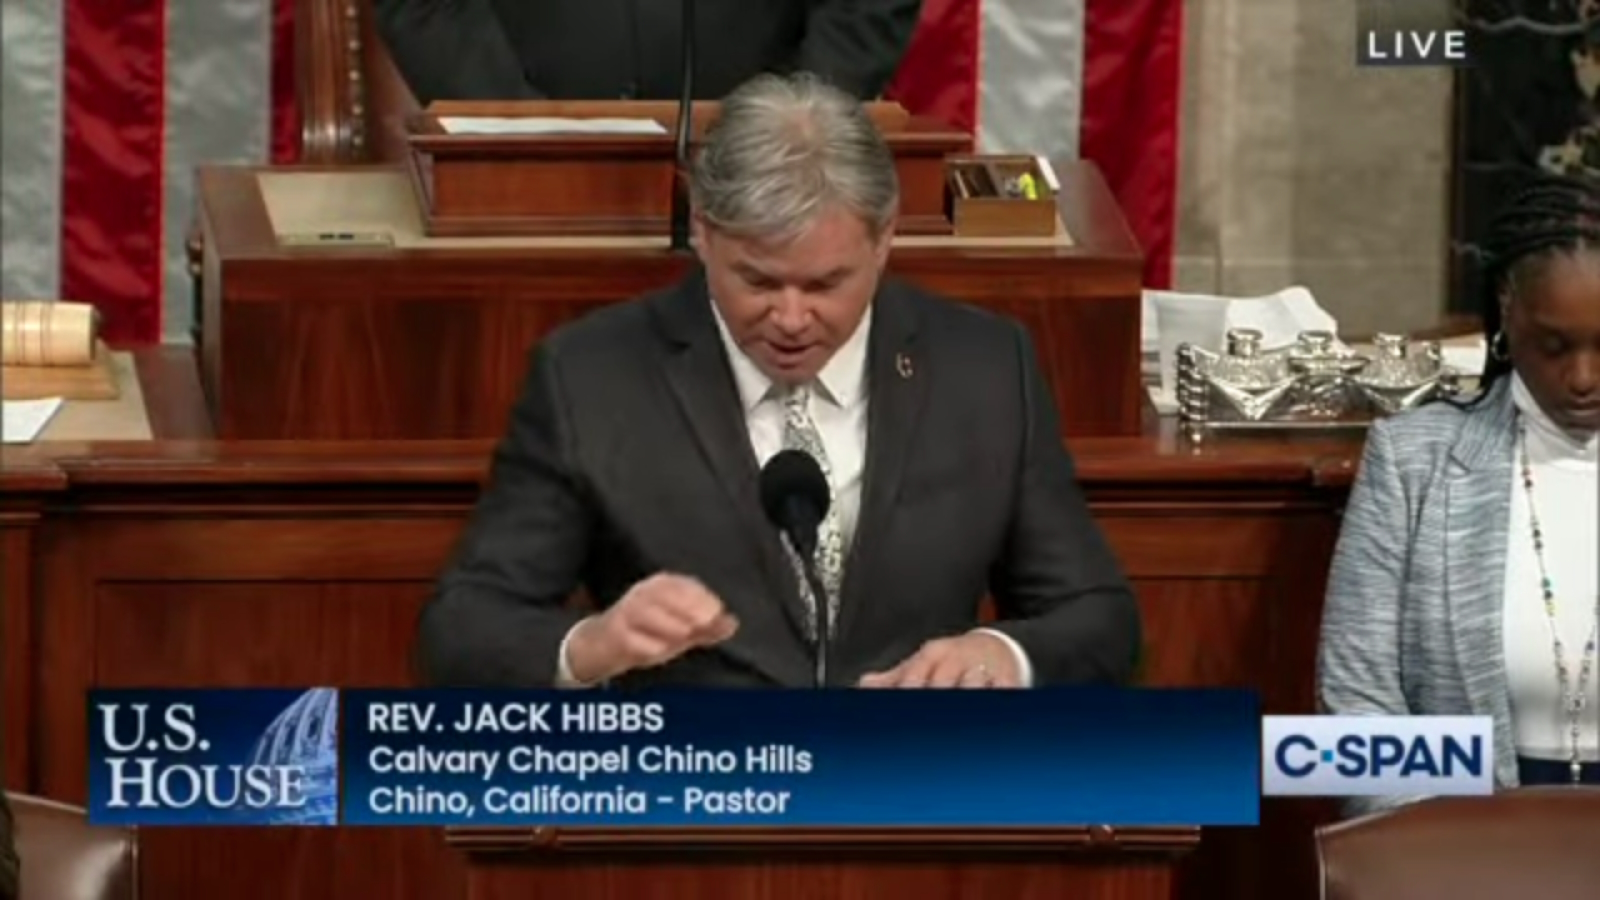 Democrats Furious, File Complaint Against Speaker Johnson Over Pastor’s Prayer